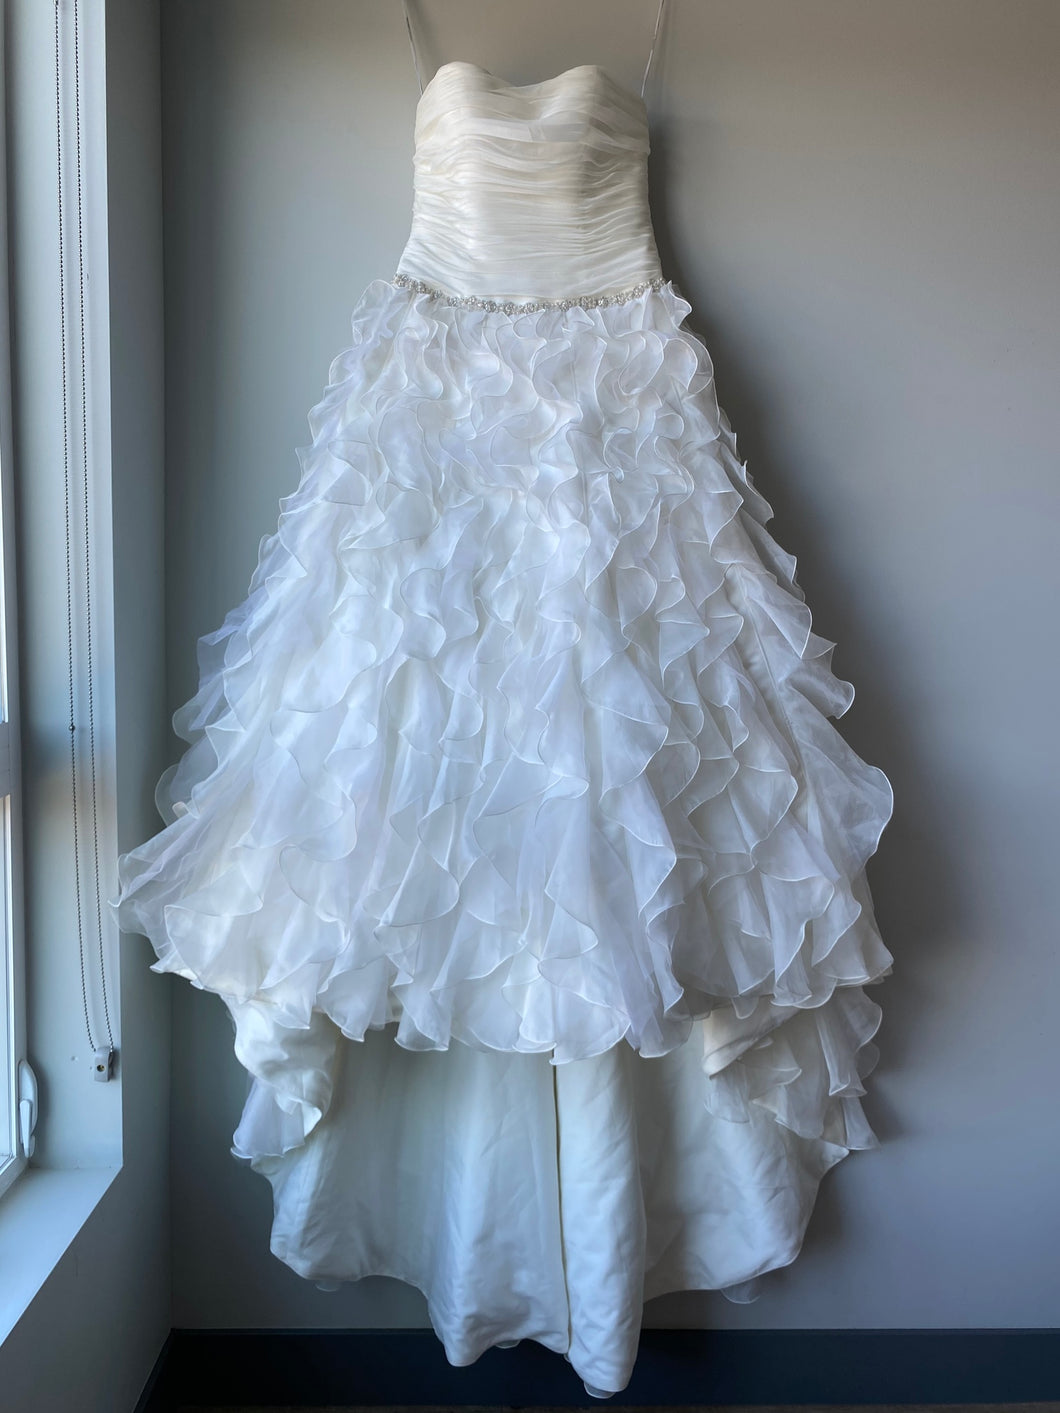 David's Bridal 'Wg3118' wedding dress size-12 SAMPLE